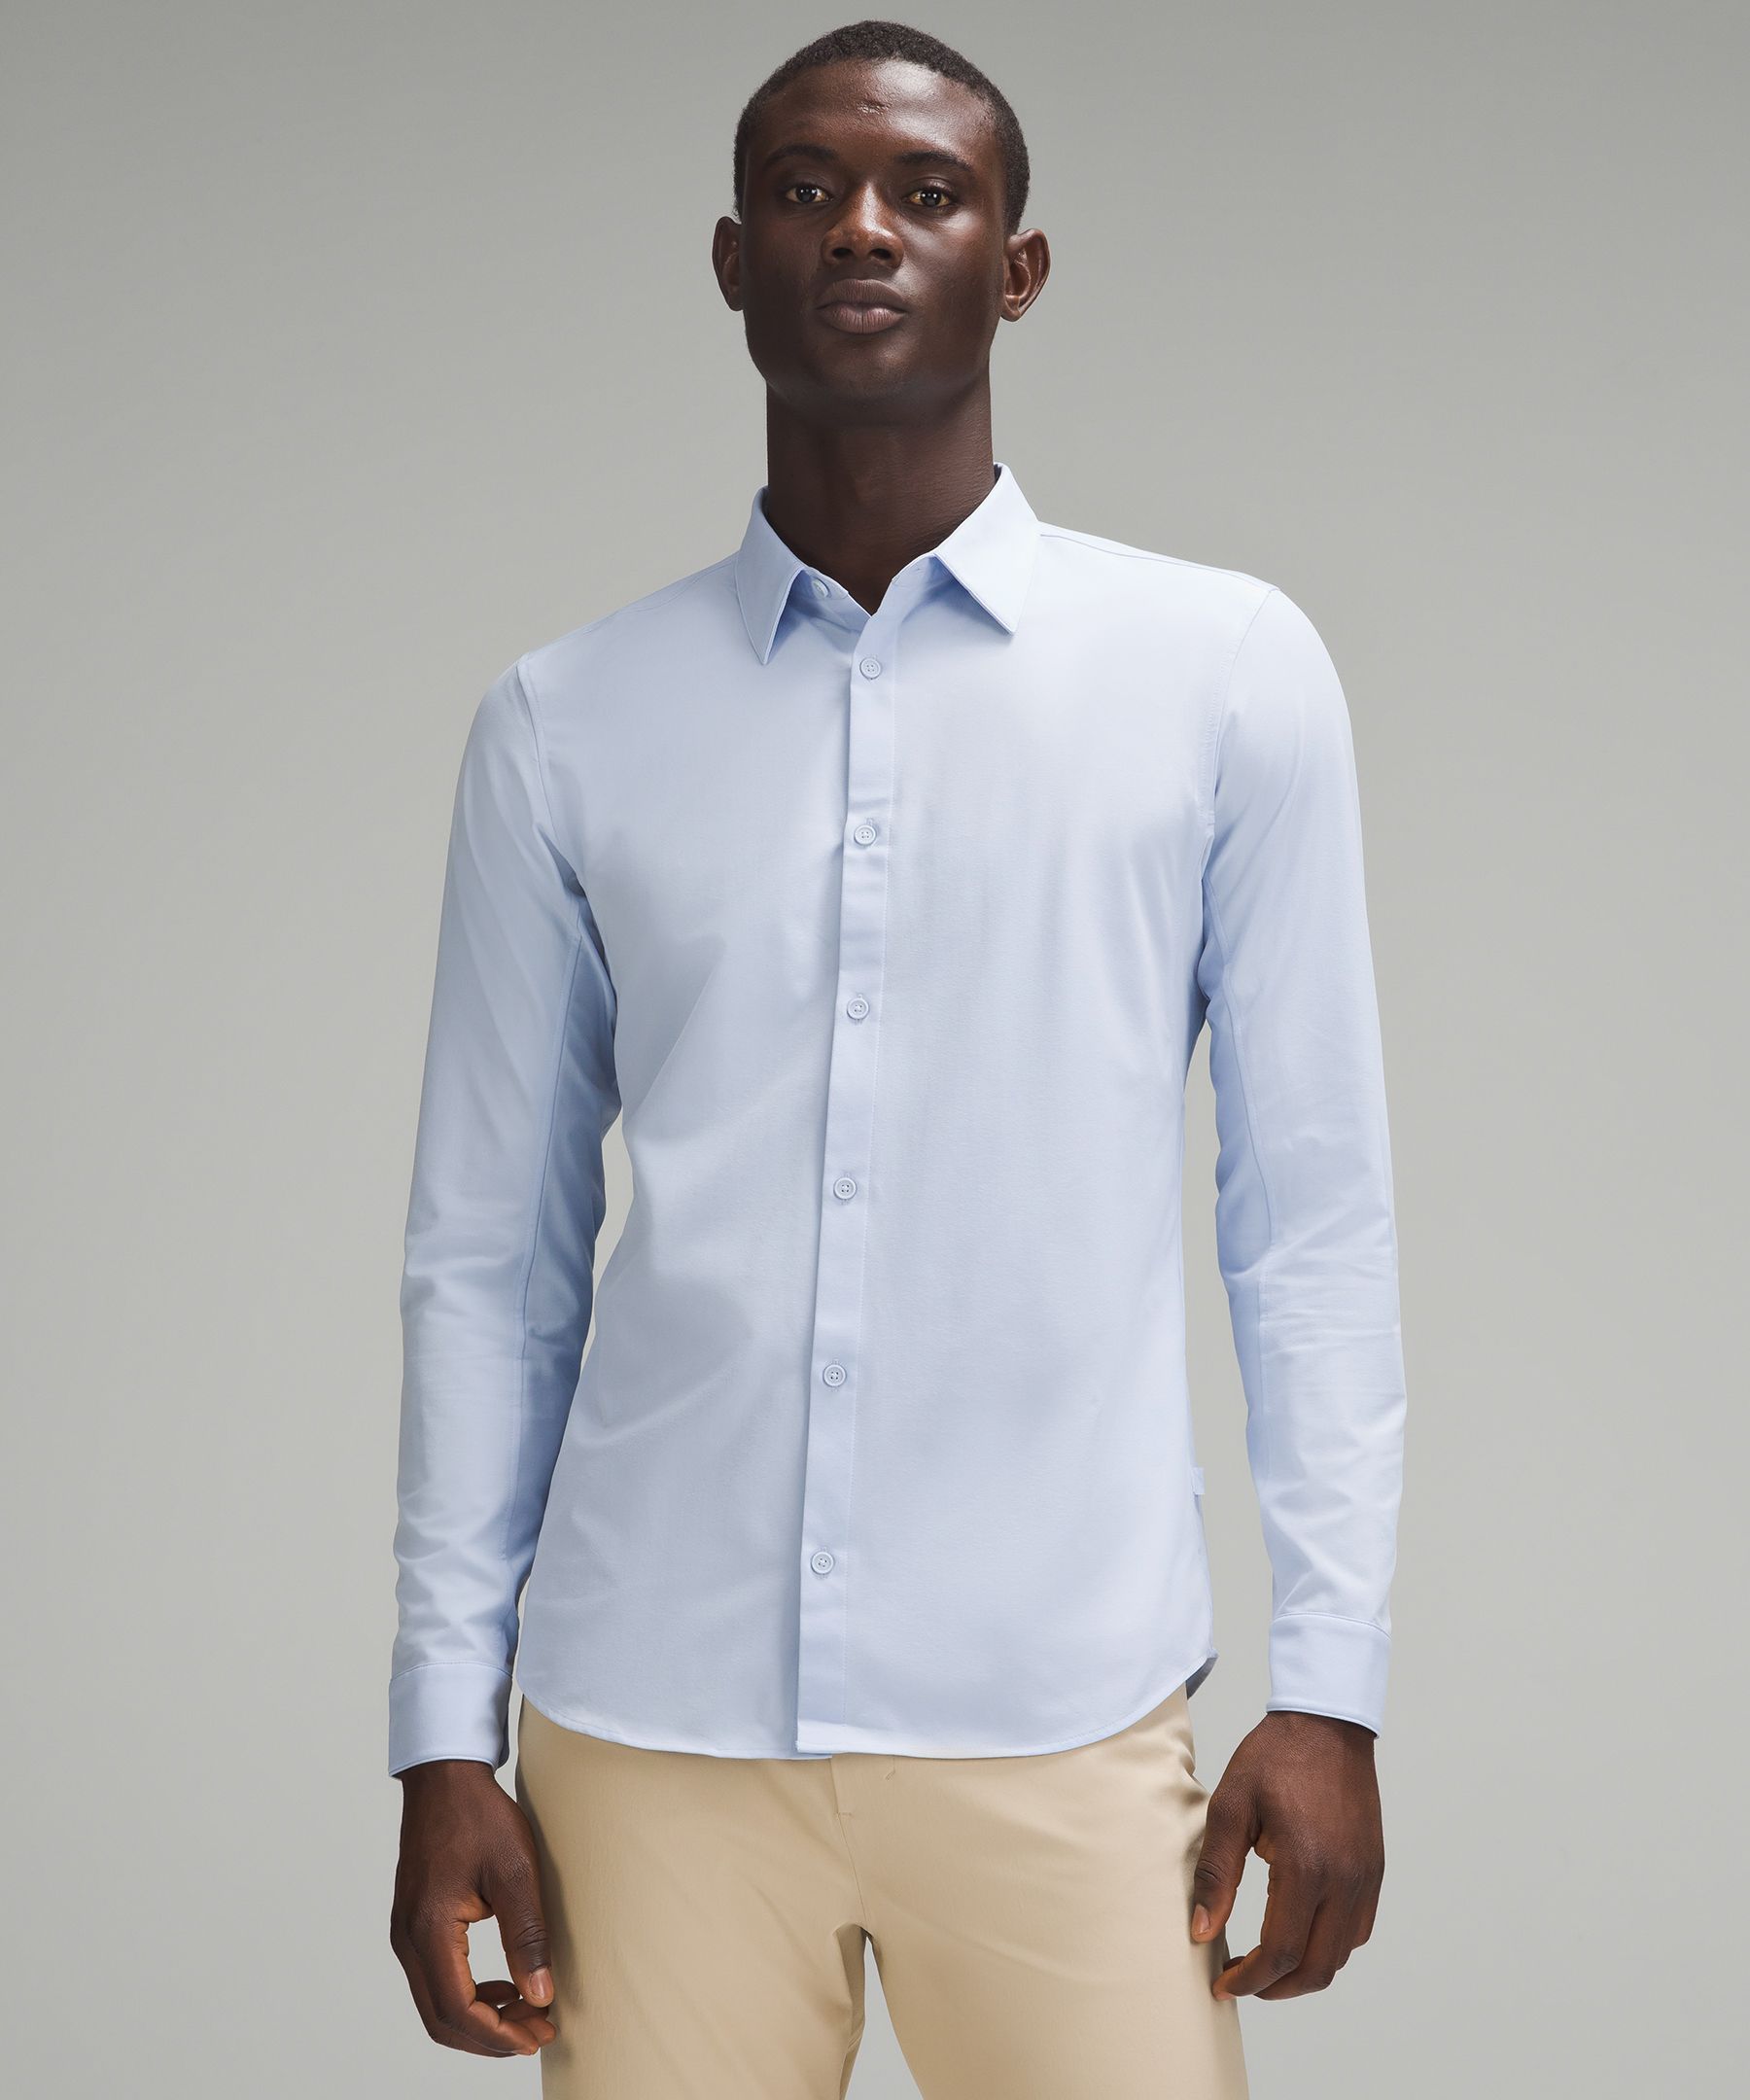 Lululemon New Venture Slim-Fit Long-Sleeve Shirt - Blue/Pastel - Size XXXL Easy Care Fabric